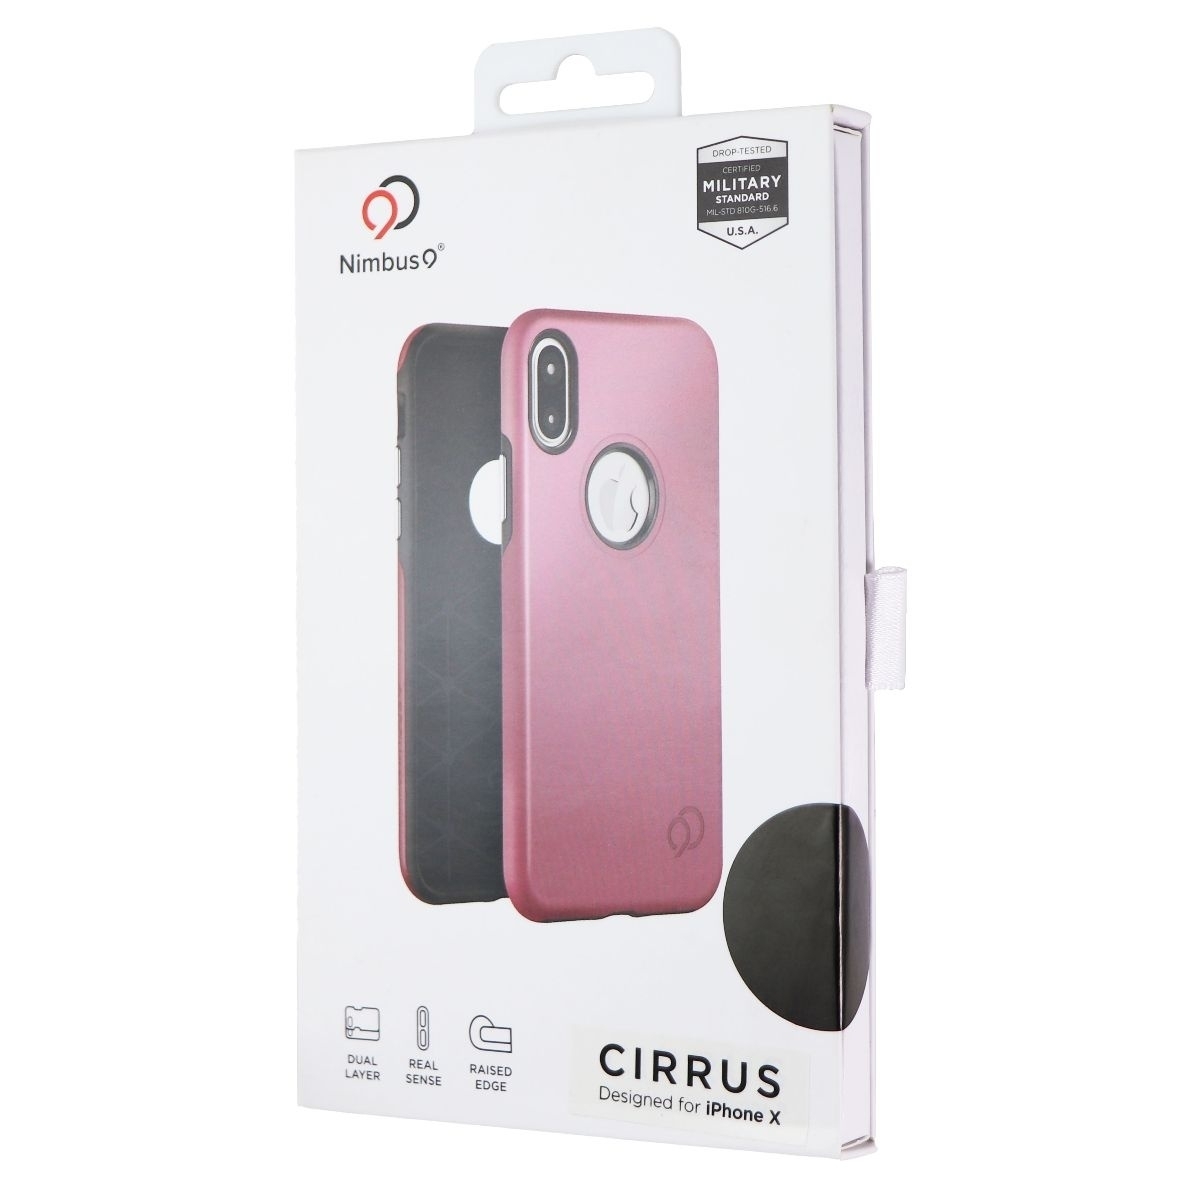 Nimbus9 Cirrus Series Dual Layer Case For Apple IPhone Xs/X - Rose Gold/Black